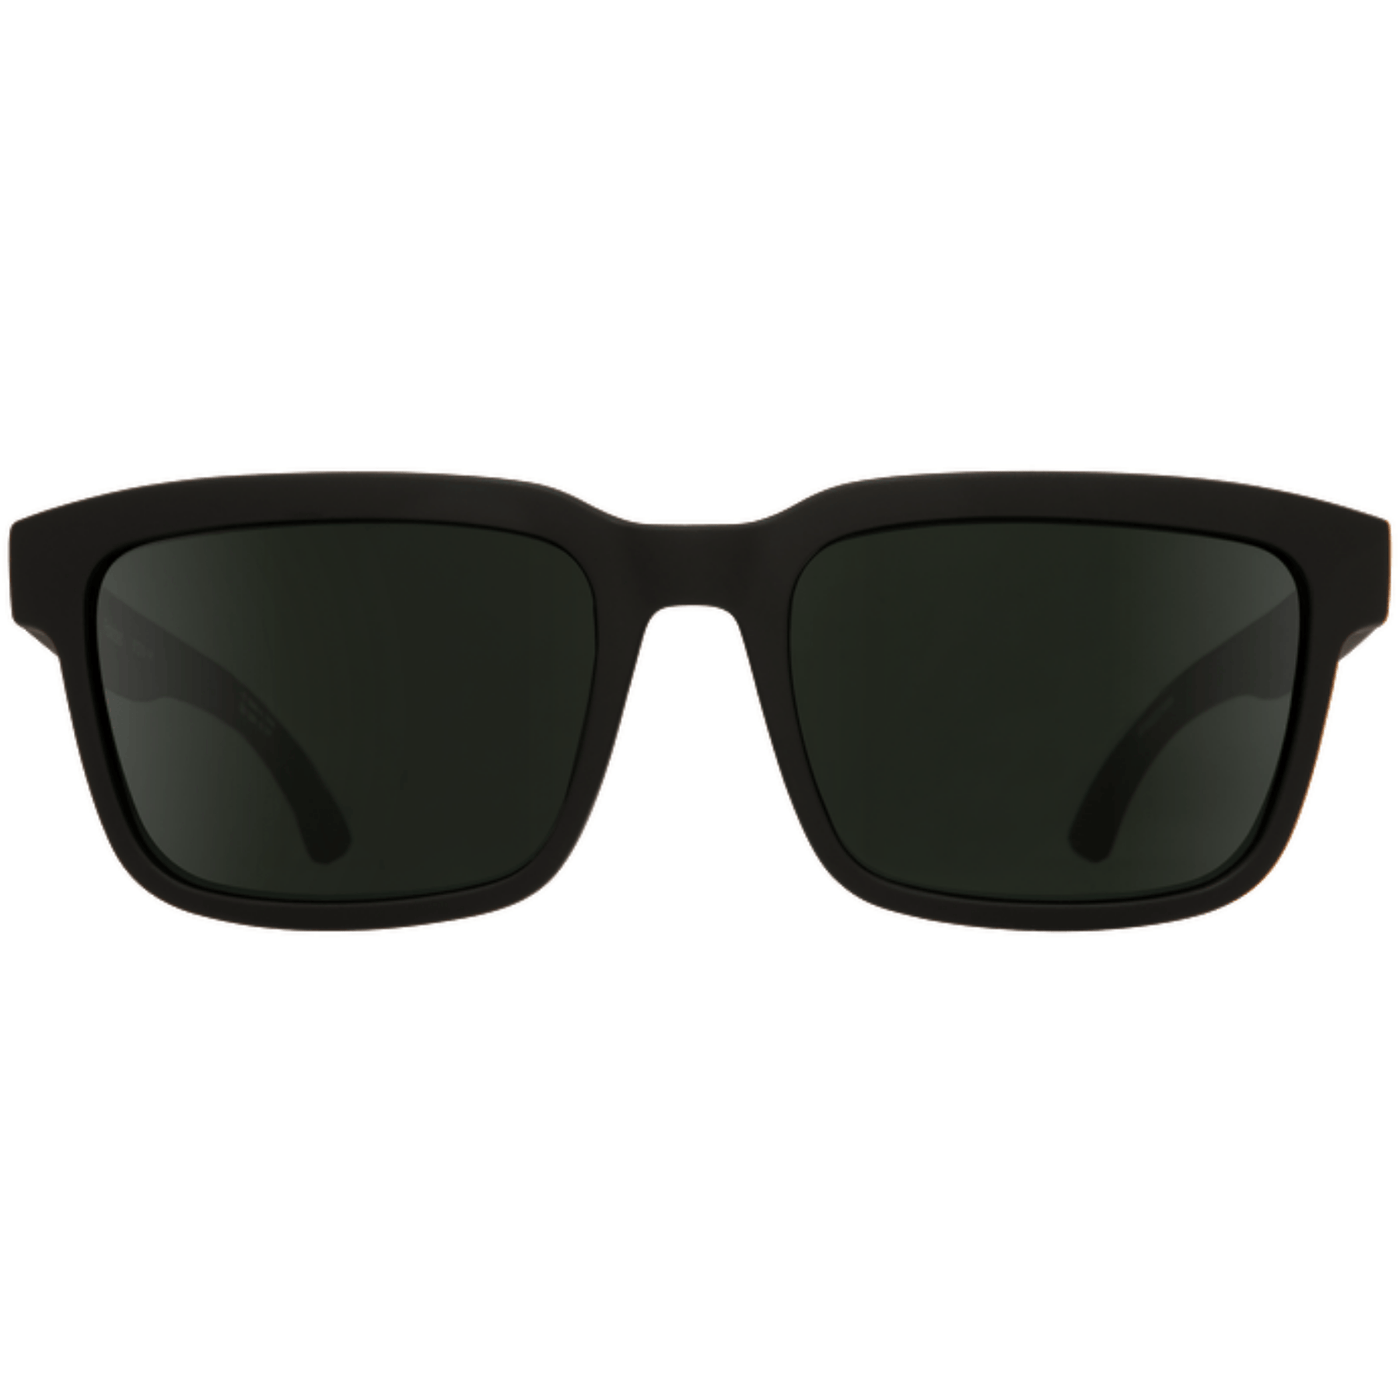 SPY HELM 2 Sunglasses, Happy Lens - SOSI Matte Black 8Lines Shop - Fast Shipping